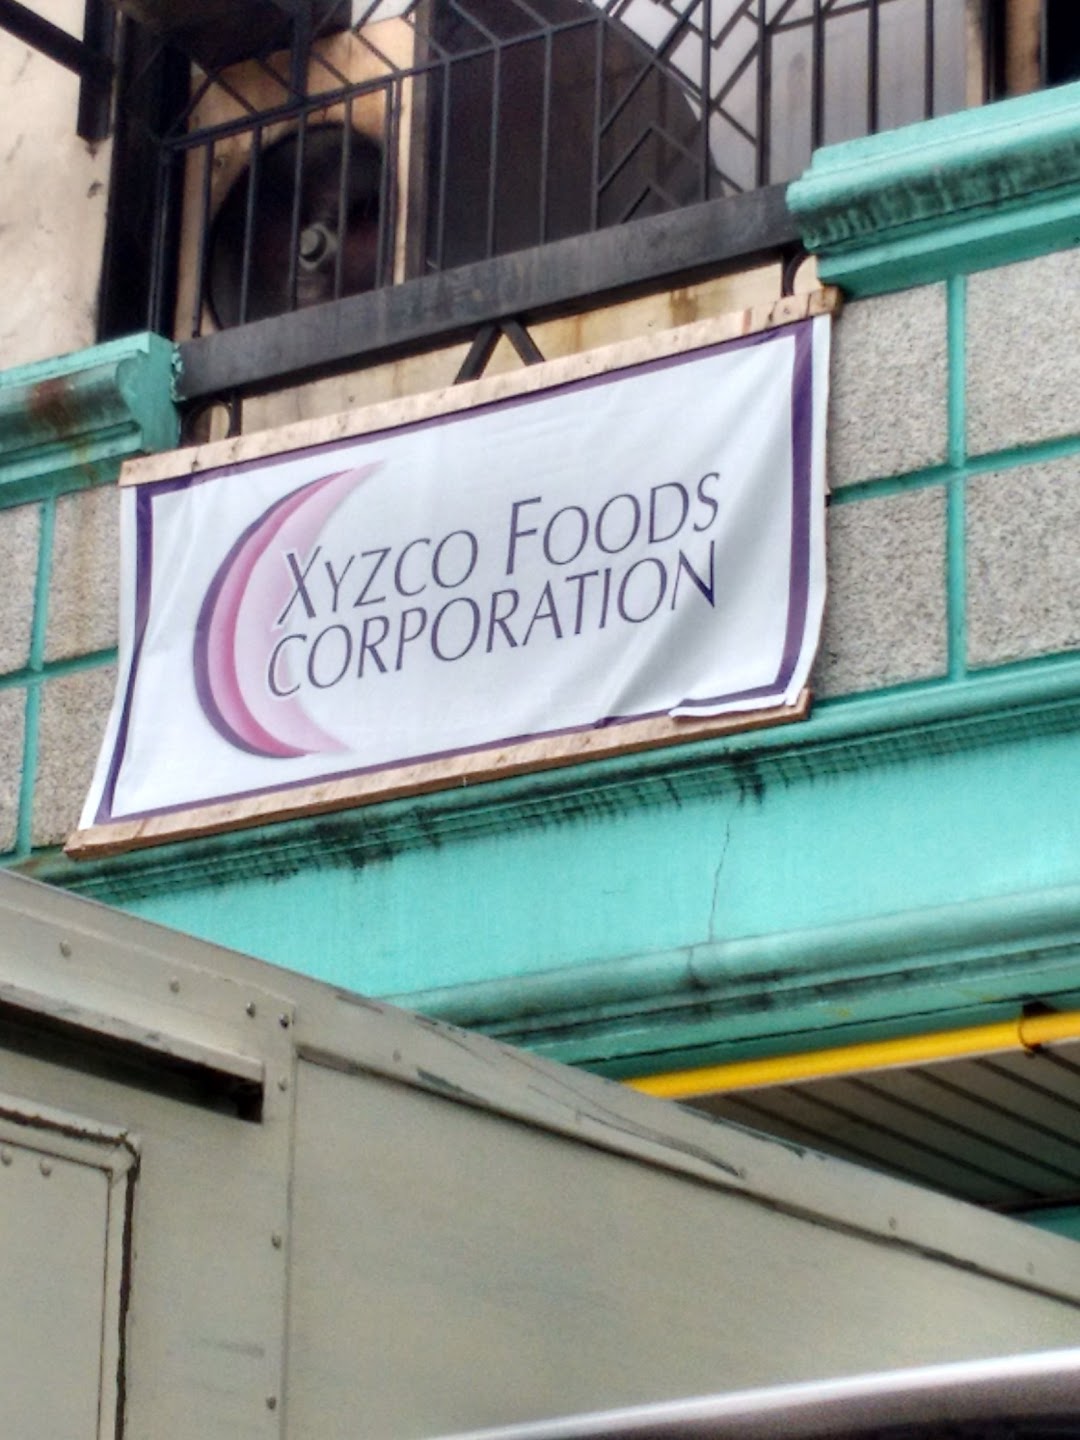 Xyzco Foods Corporation